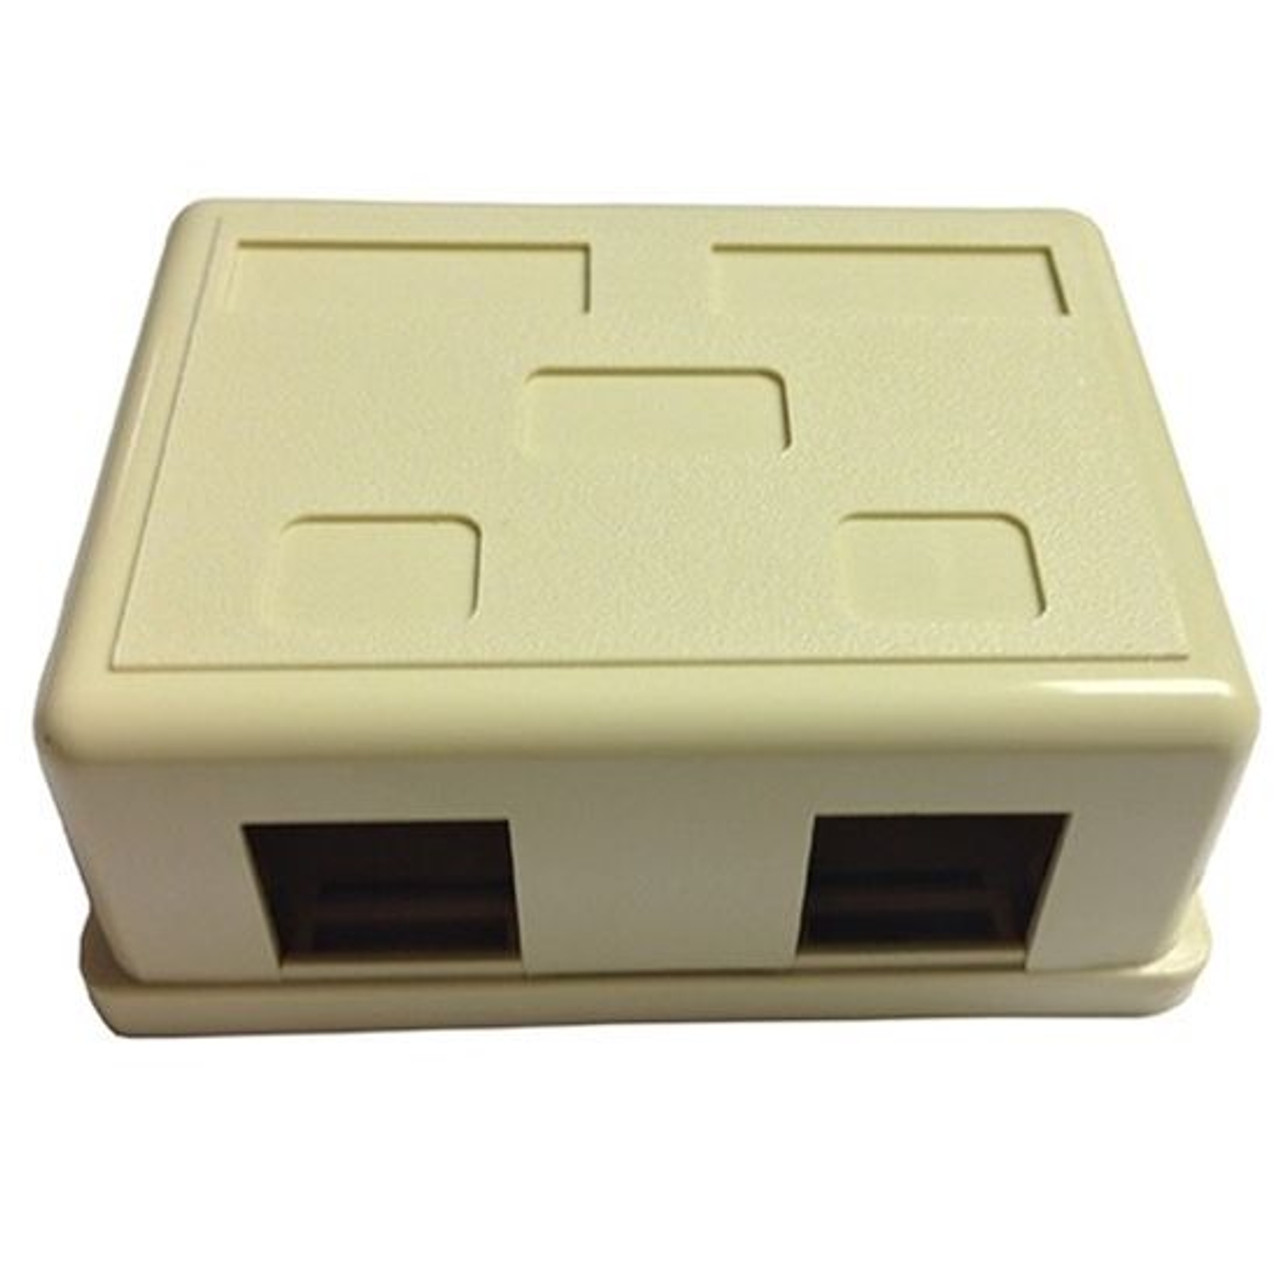 Surface Mount Biscuit Box 2 Port Modular Inserts Ivory Plastic Enclosure Box Jack Block Junction Network Telephone Jack Data Outlet